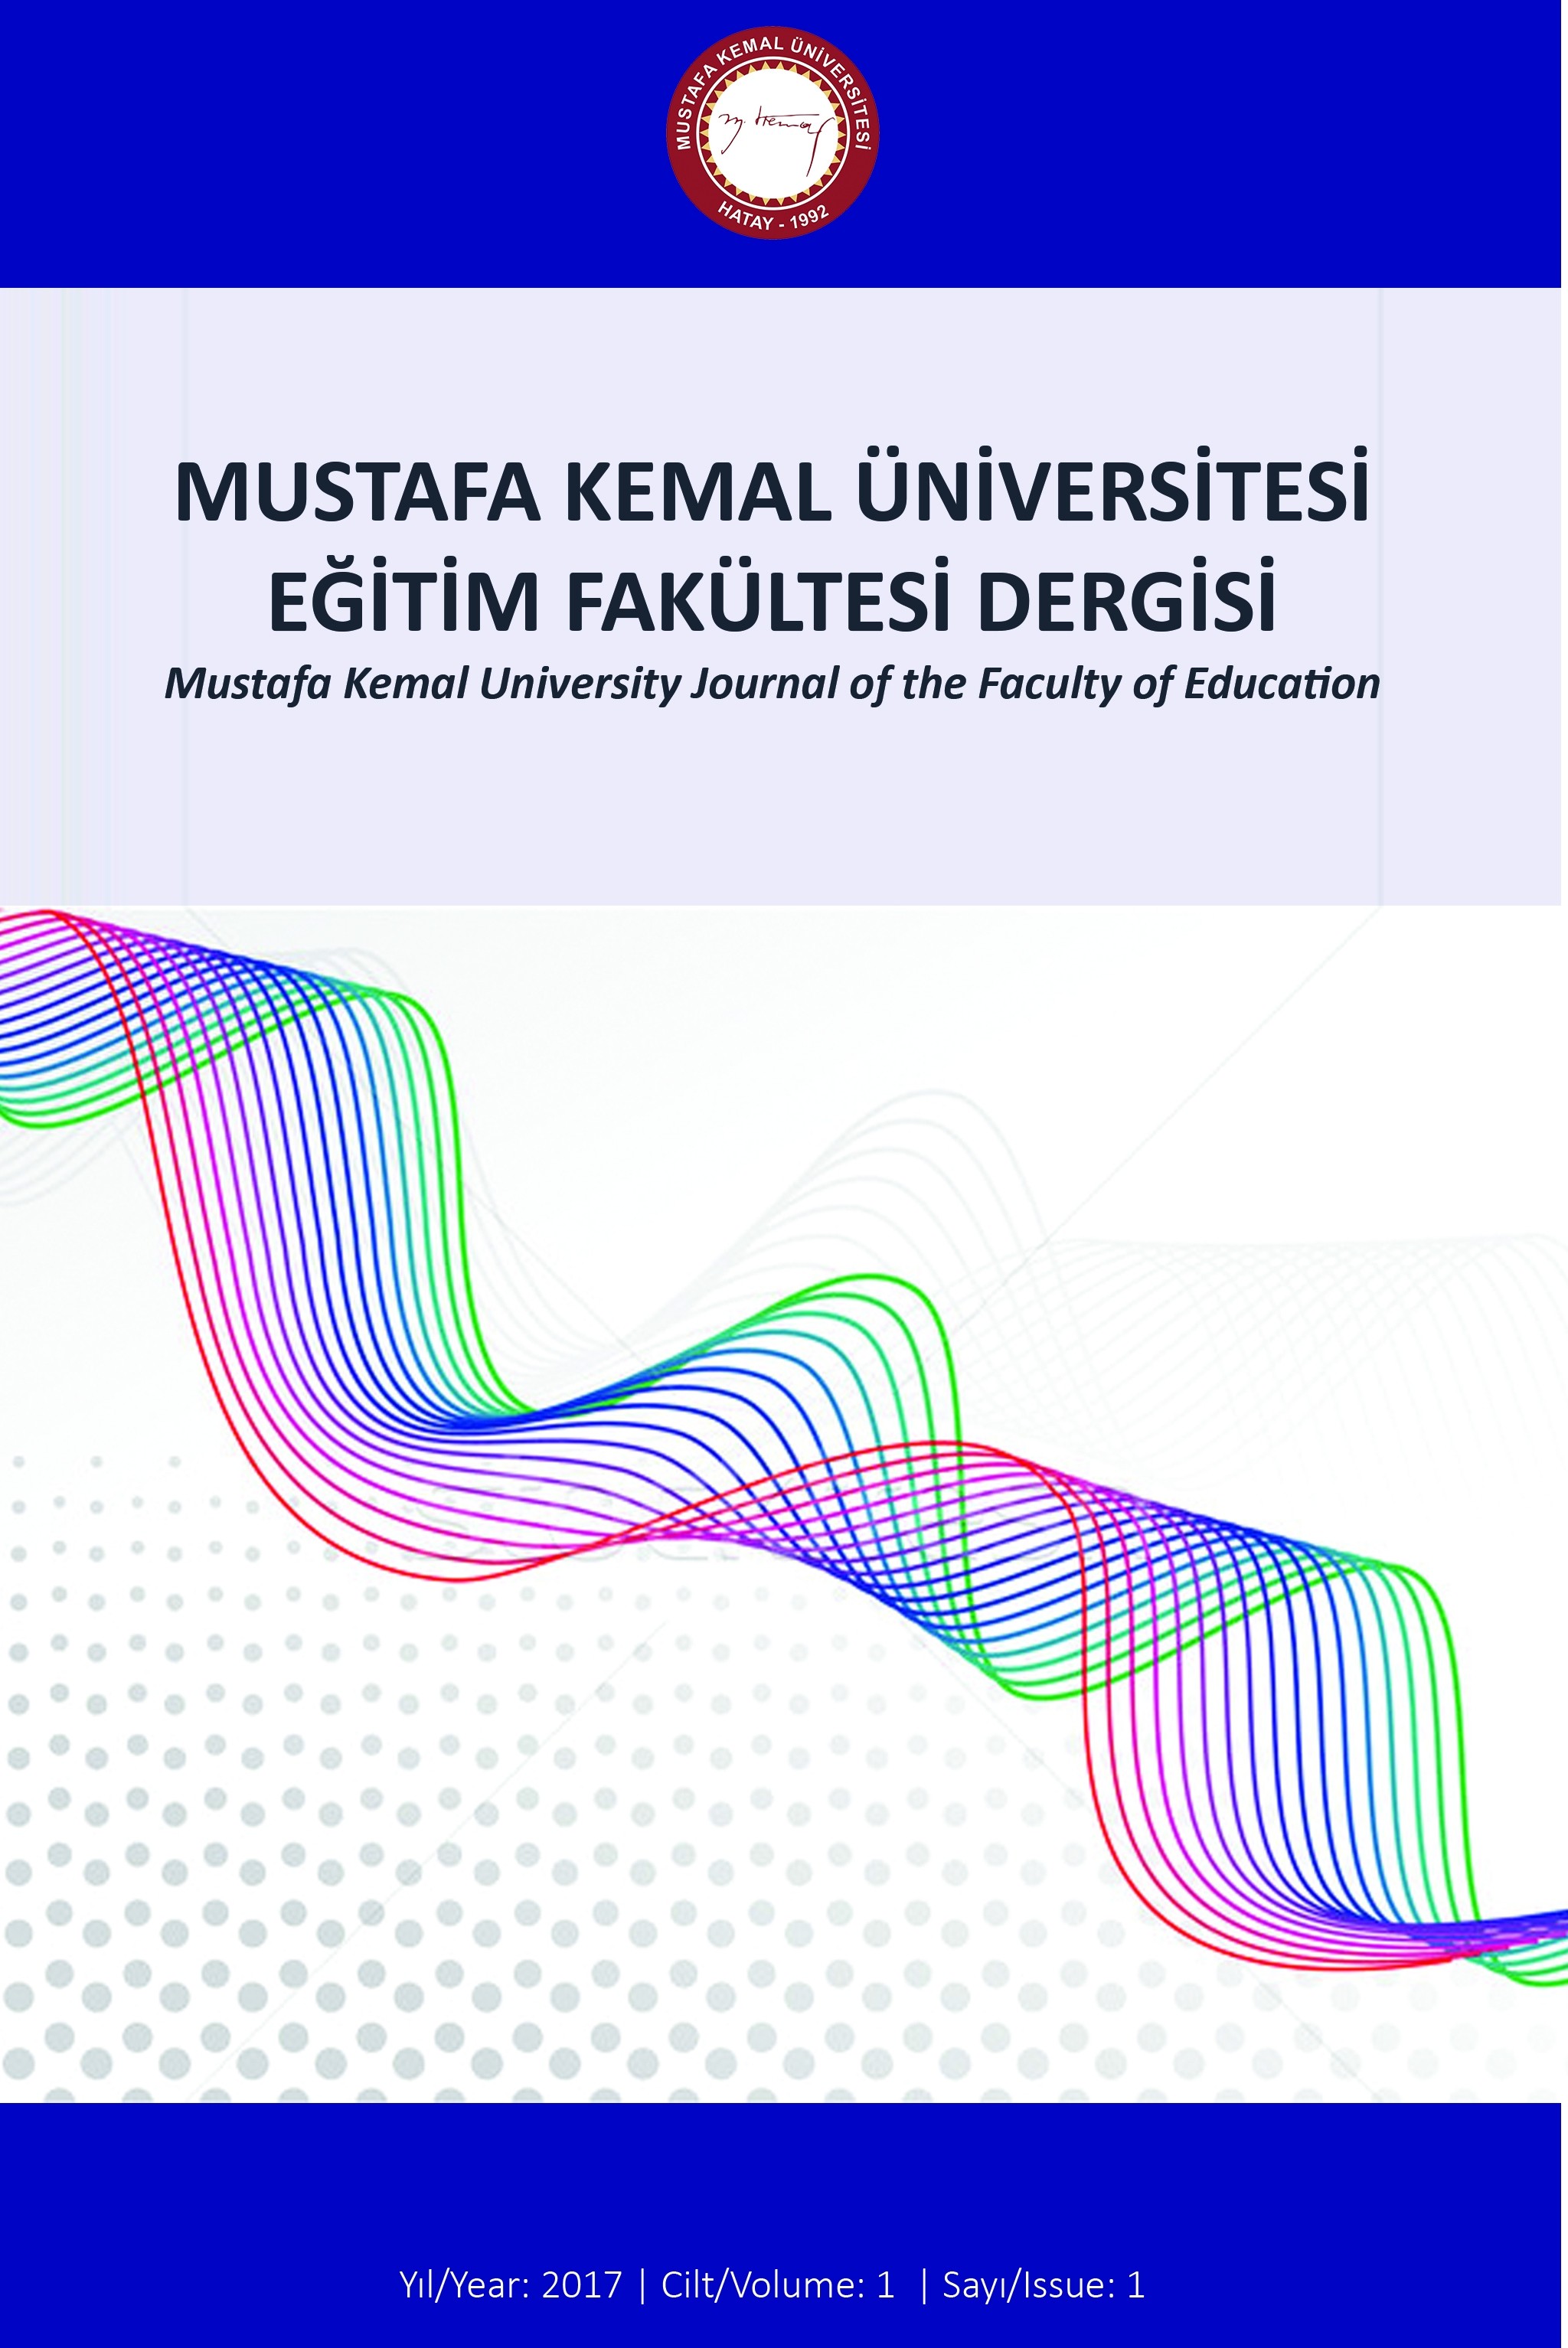 Mustafa Kemal University Journal of Faculty of Education